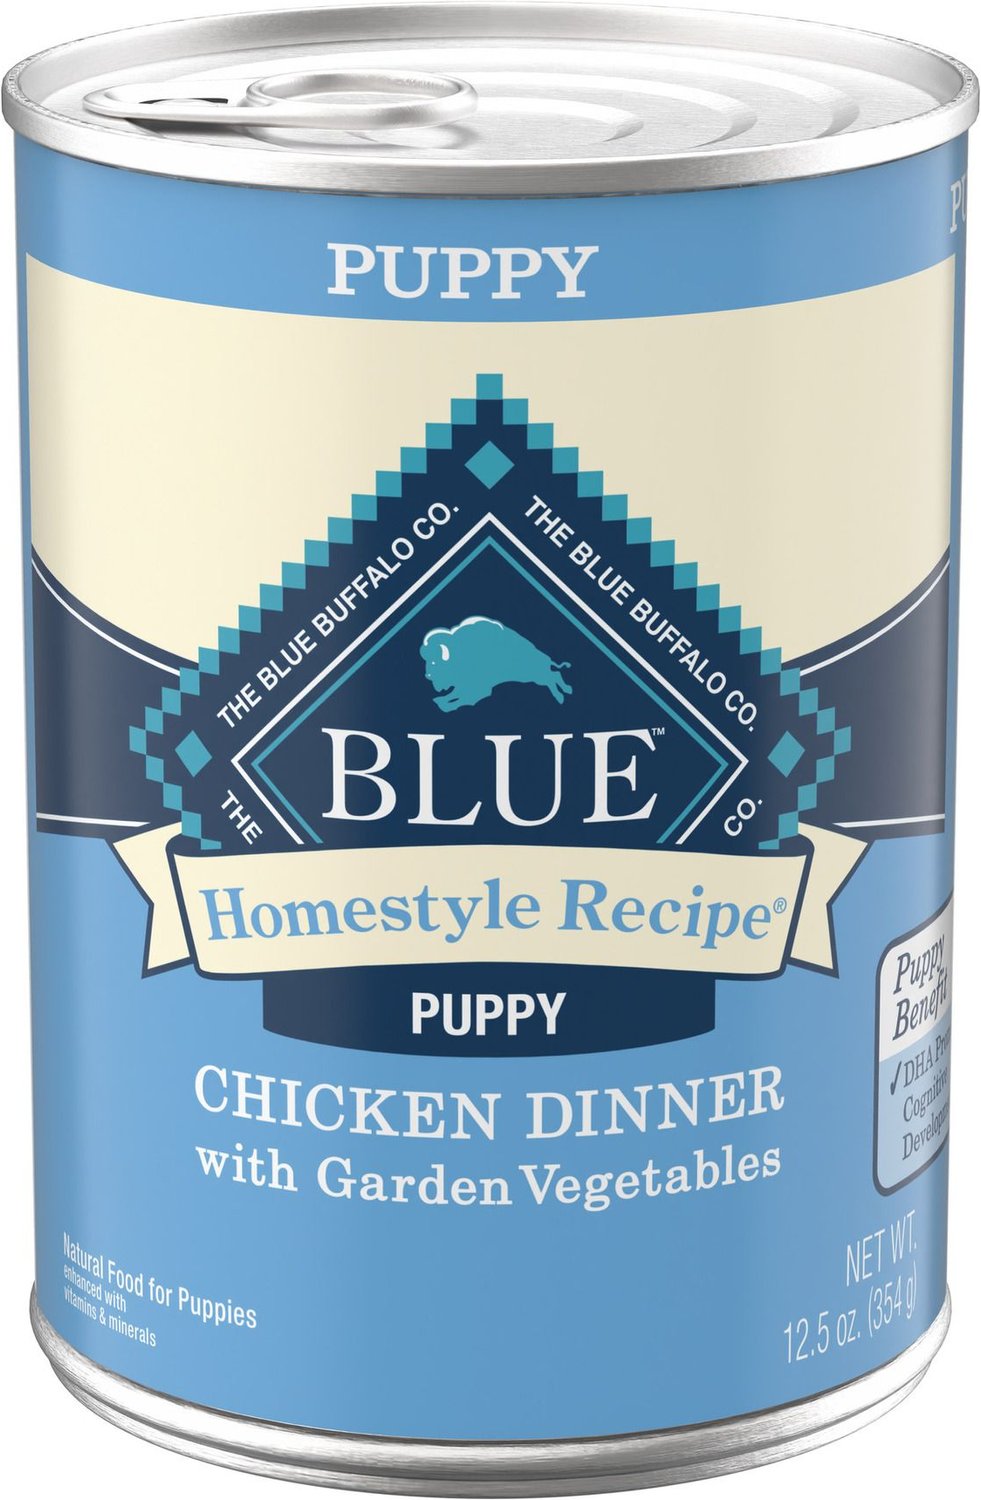 BLUE BUFFALO Homestyle Recipe Puppy Chicken Dinner with Garden